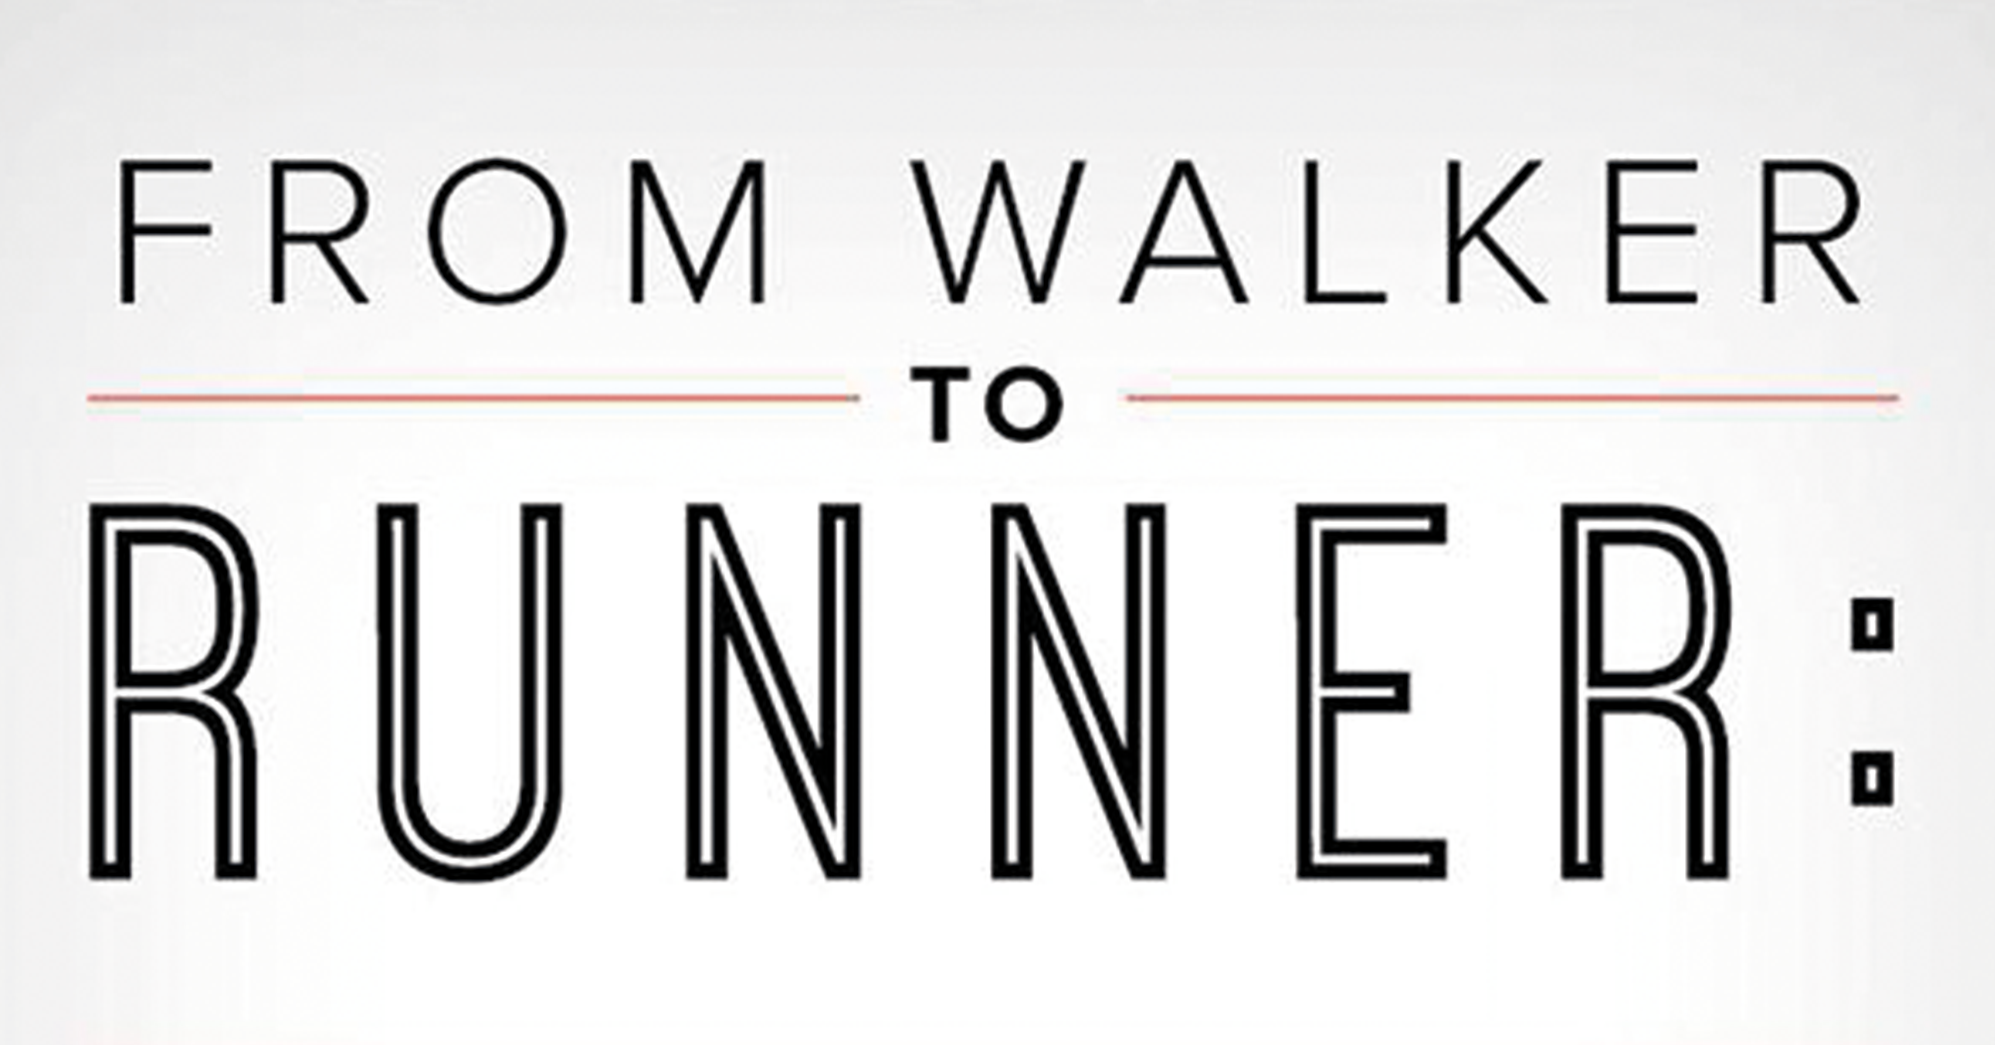 From walker to runner - The 8 Week Plan